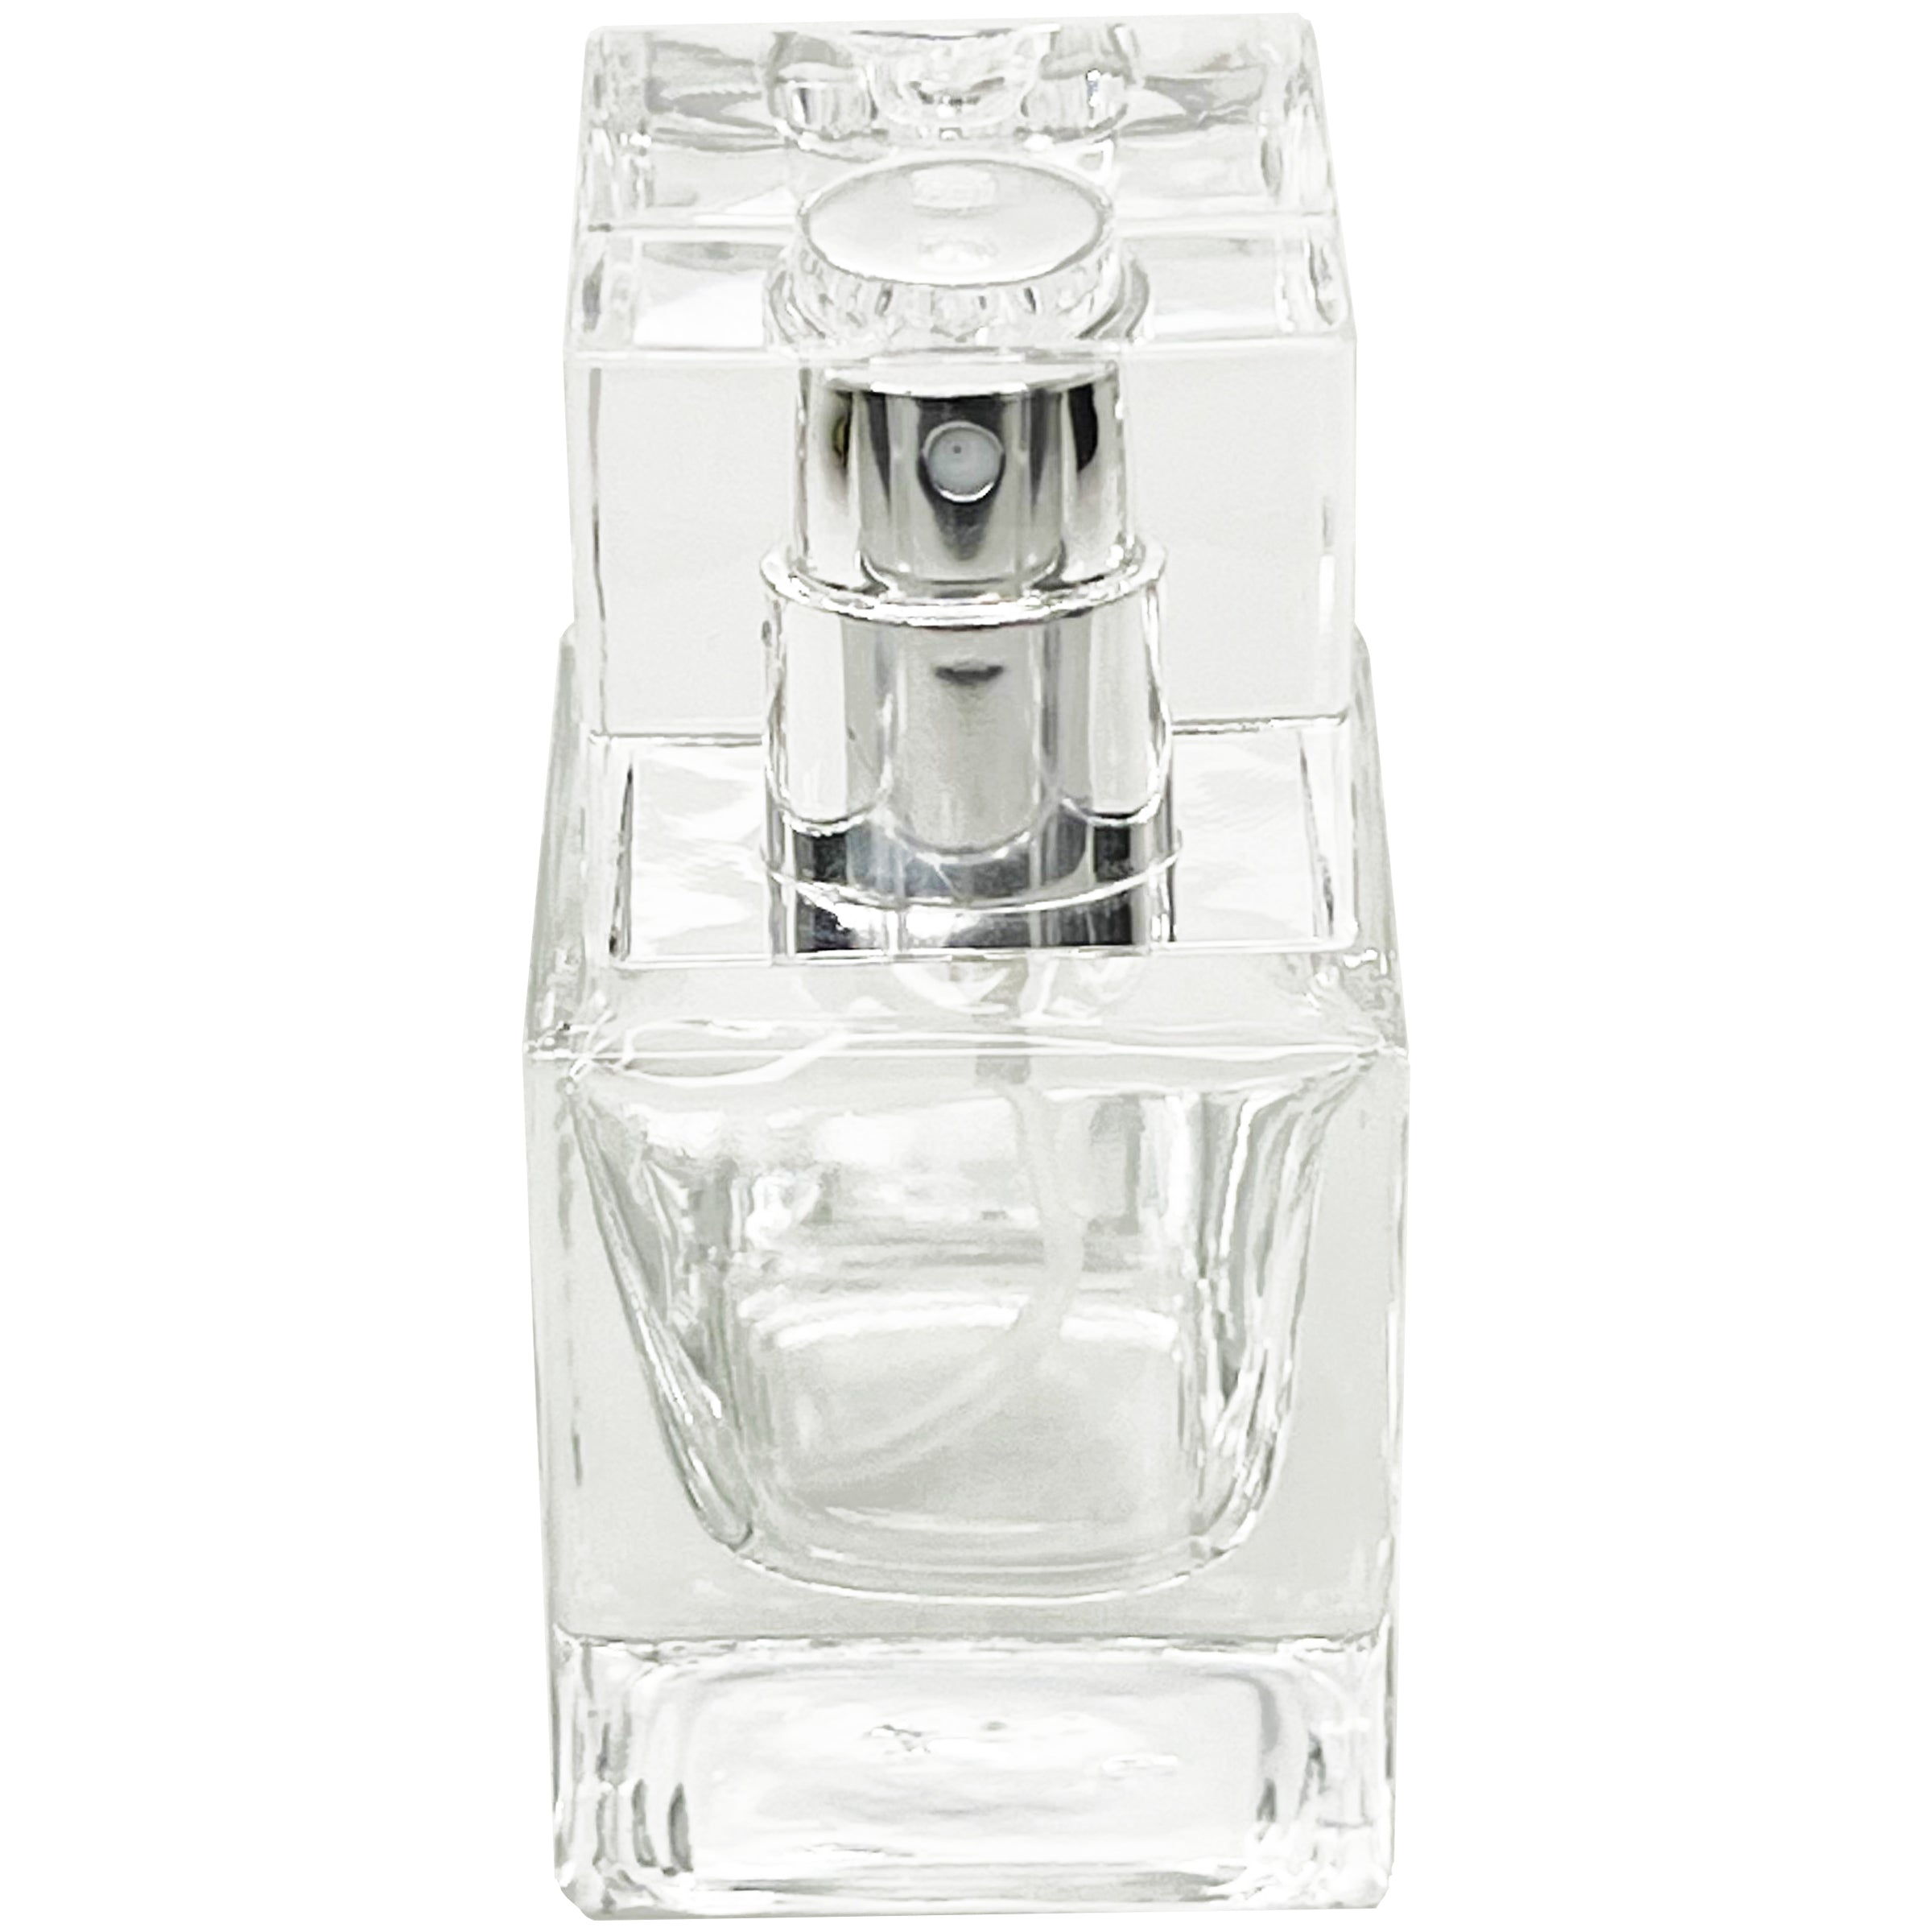 25ml 0.85oz High Quality Cube thick glass perfume spray bottles